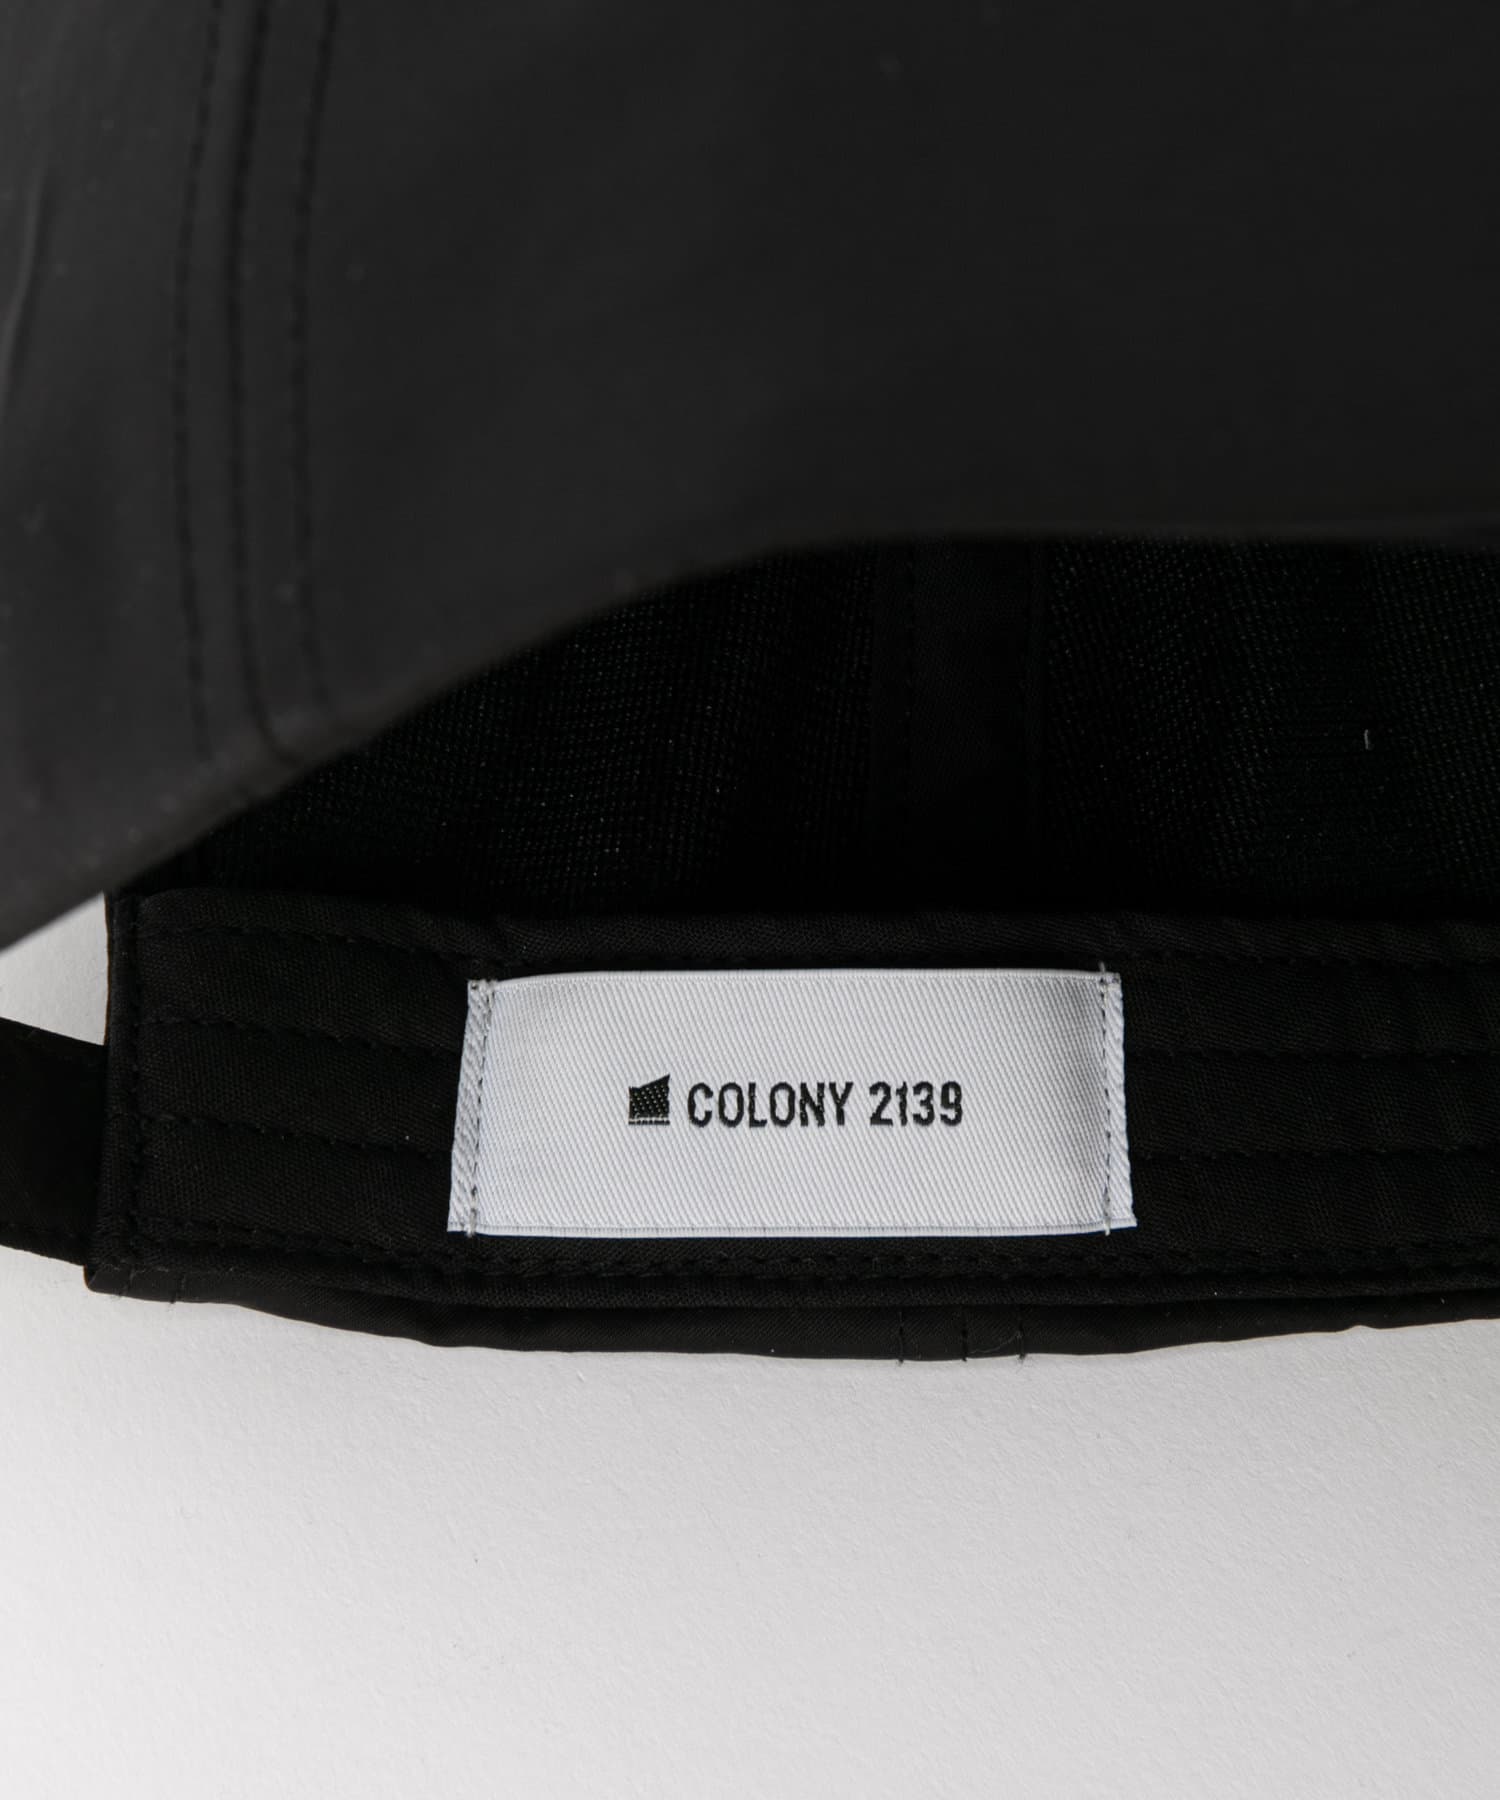 COLONY 2139(コロニー トゥーワンスリーナイン) ポリエステルキャップ